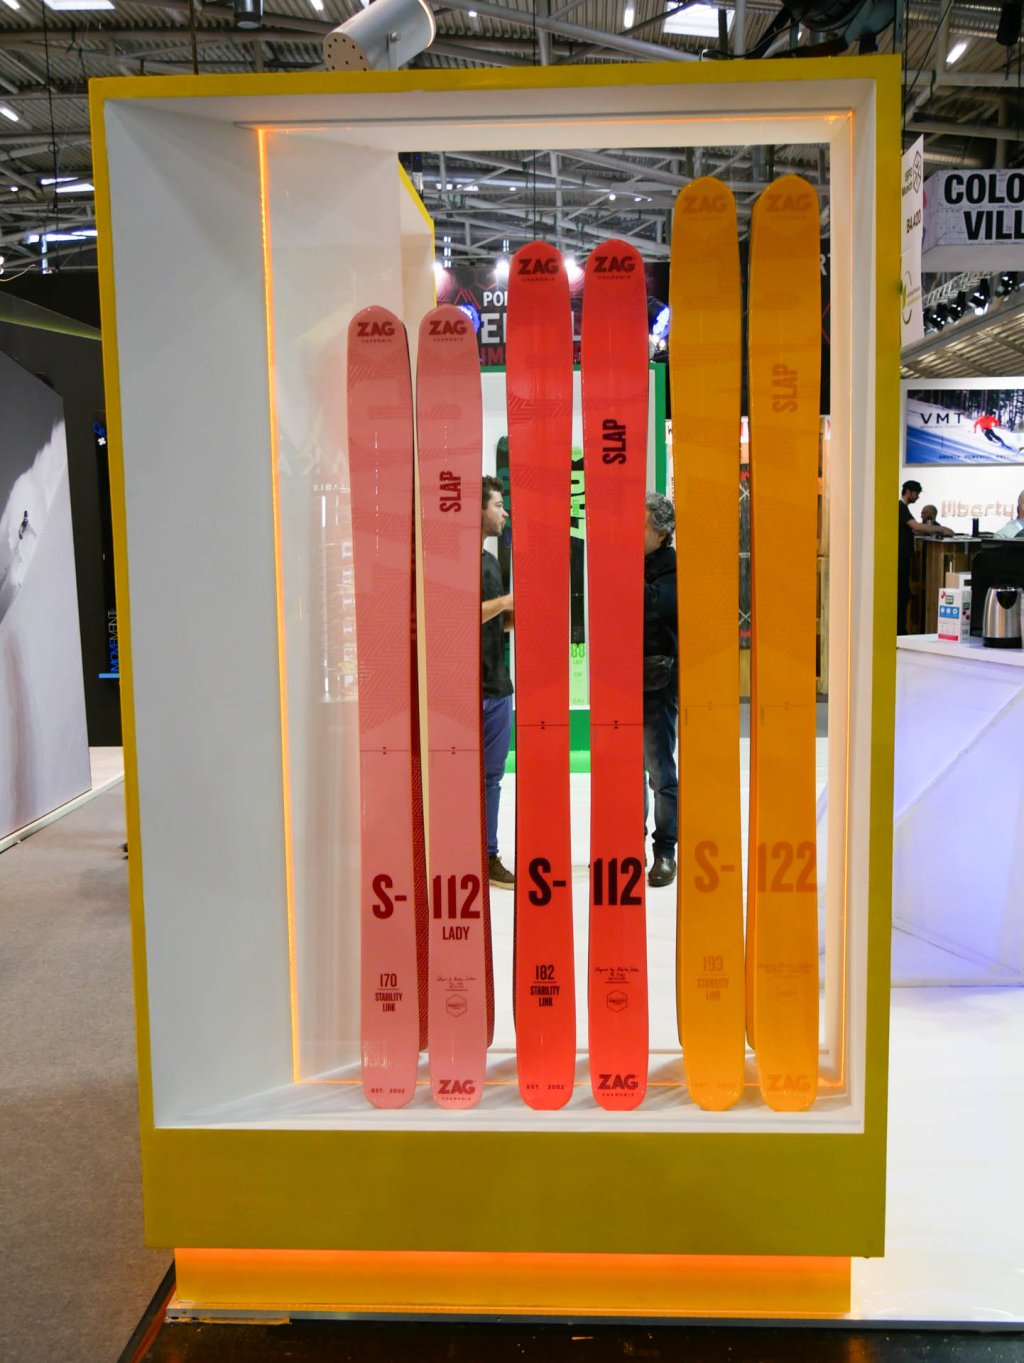 ZAG Skis were also represented at the ISPO